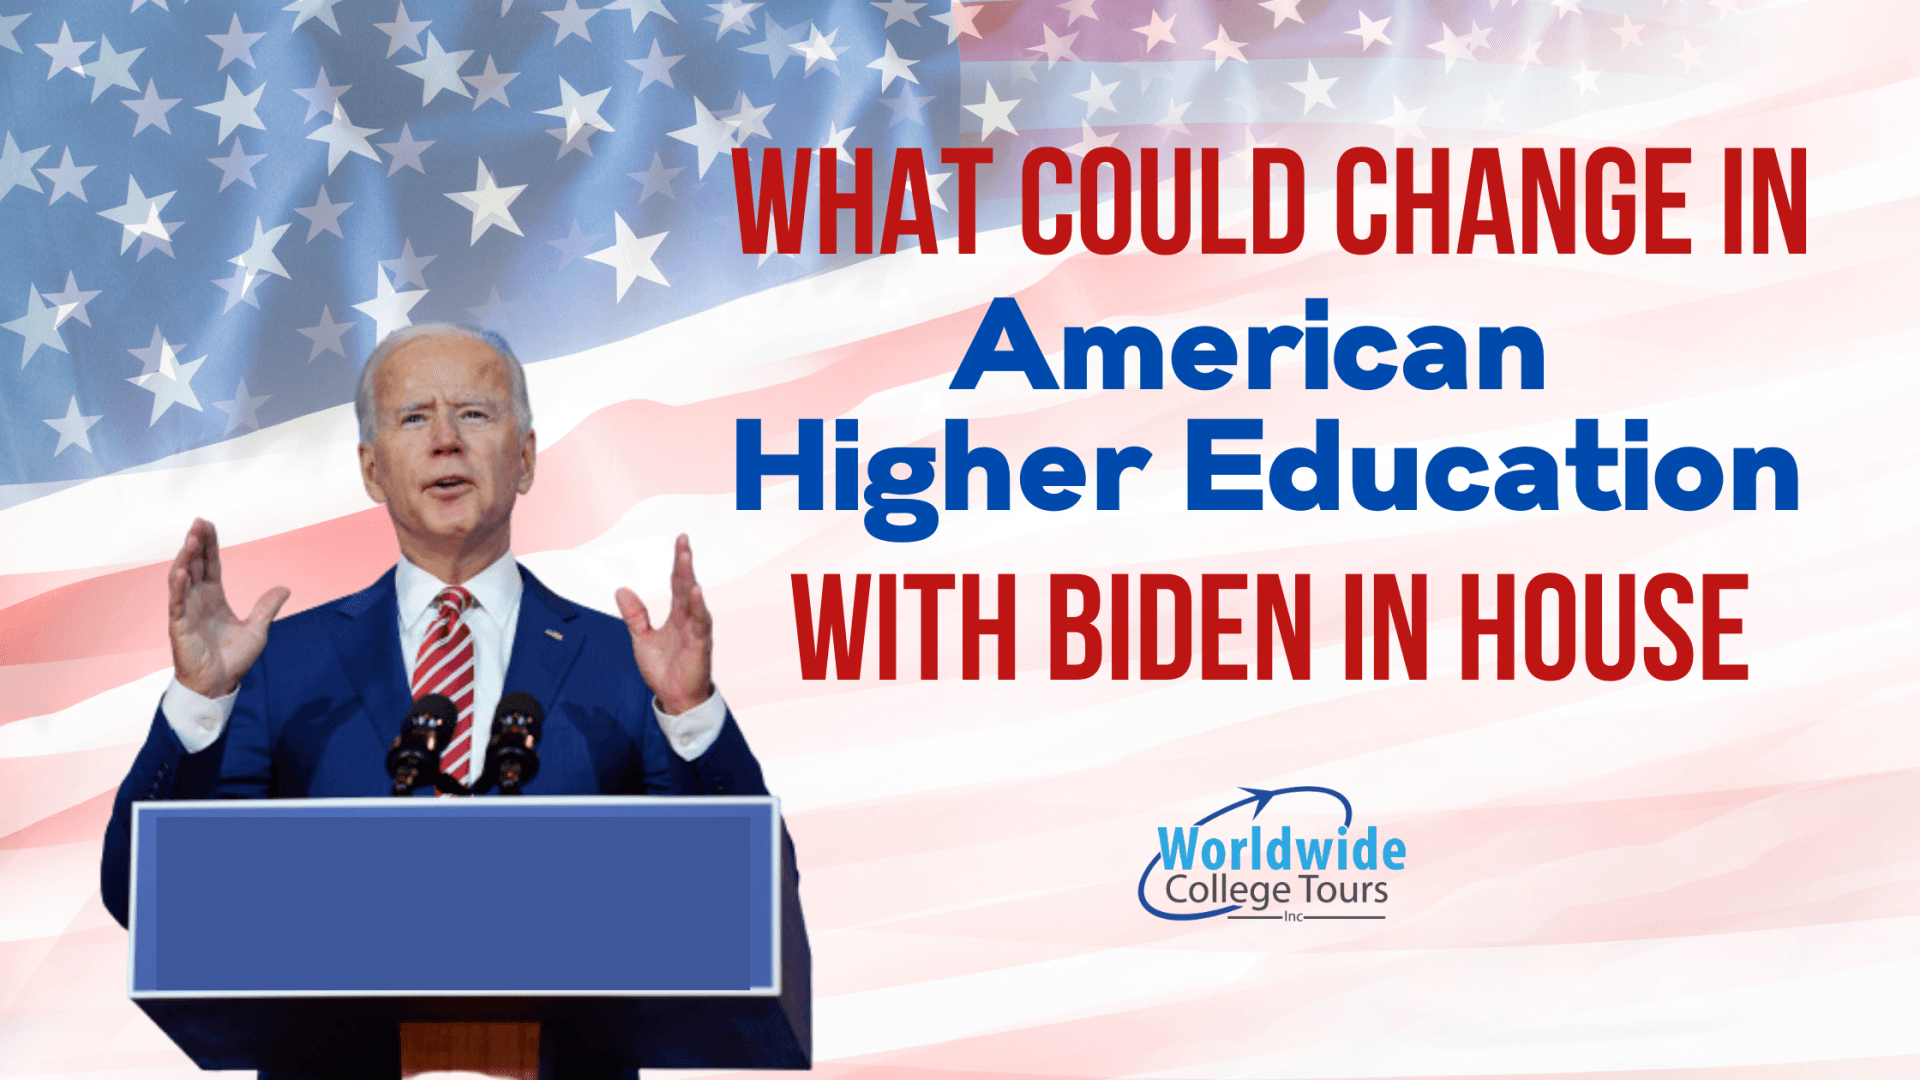 Biden | President | Trump | Elections | Education | Higher Education | America